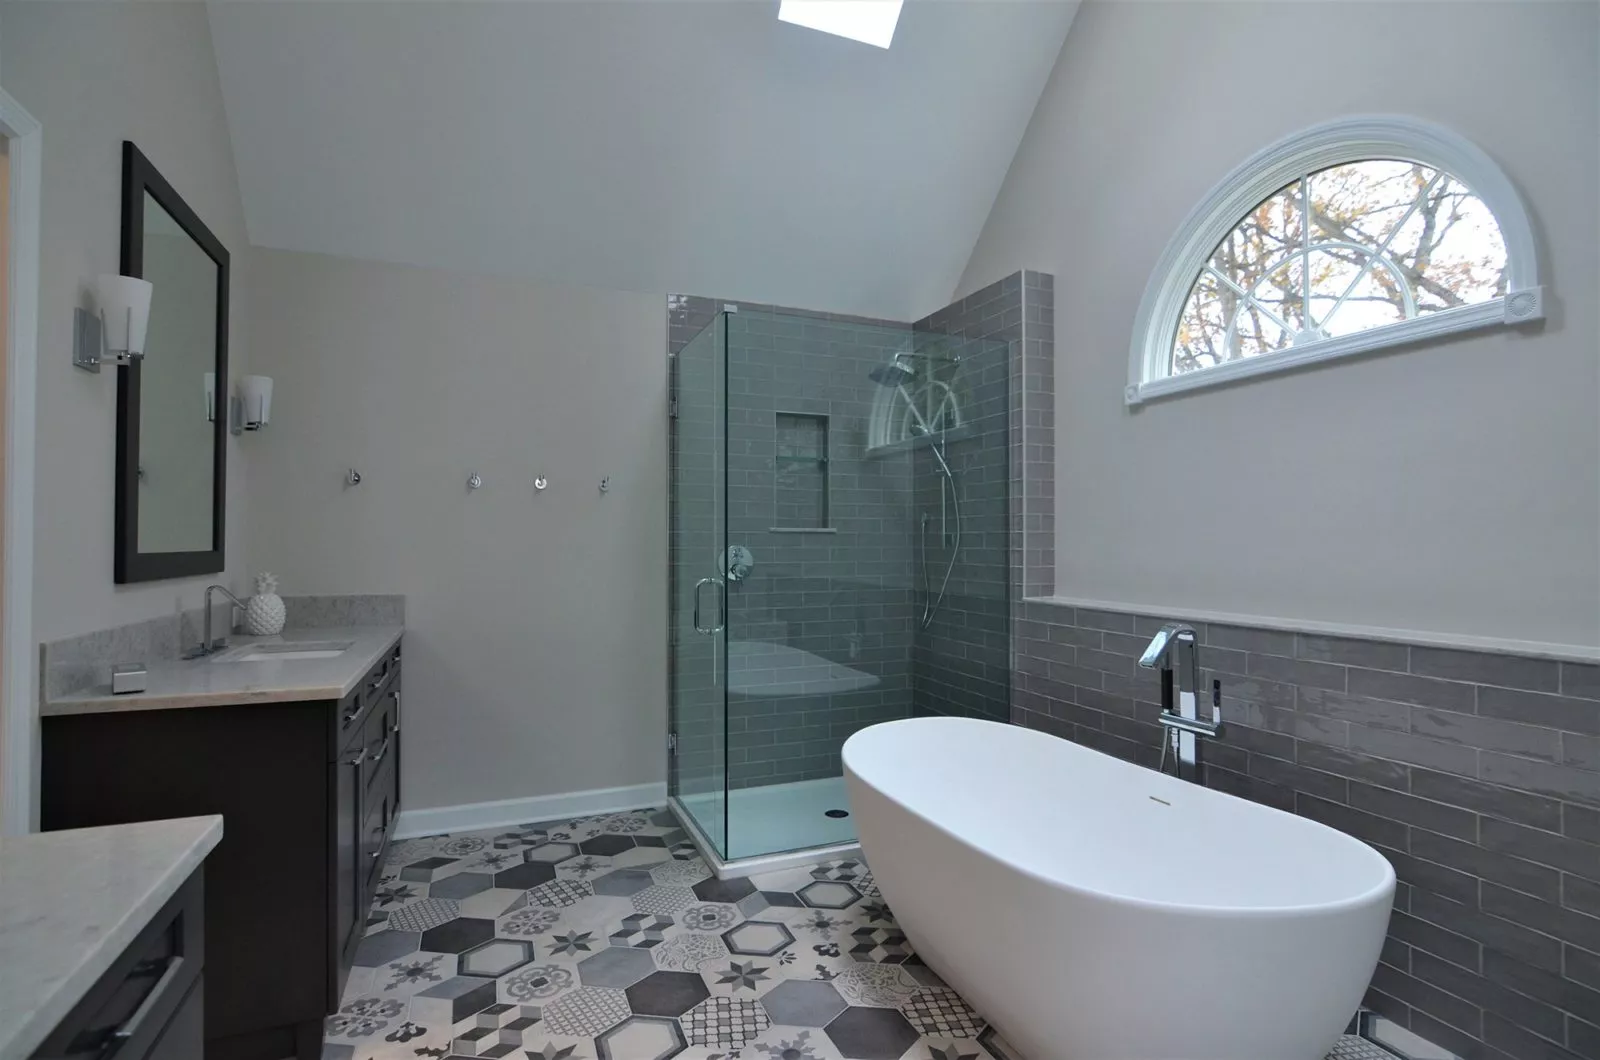 Bathroom with free-standing bathtub, glass corner shower, and sink